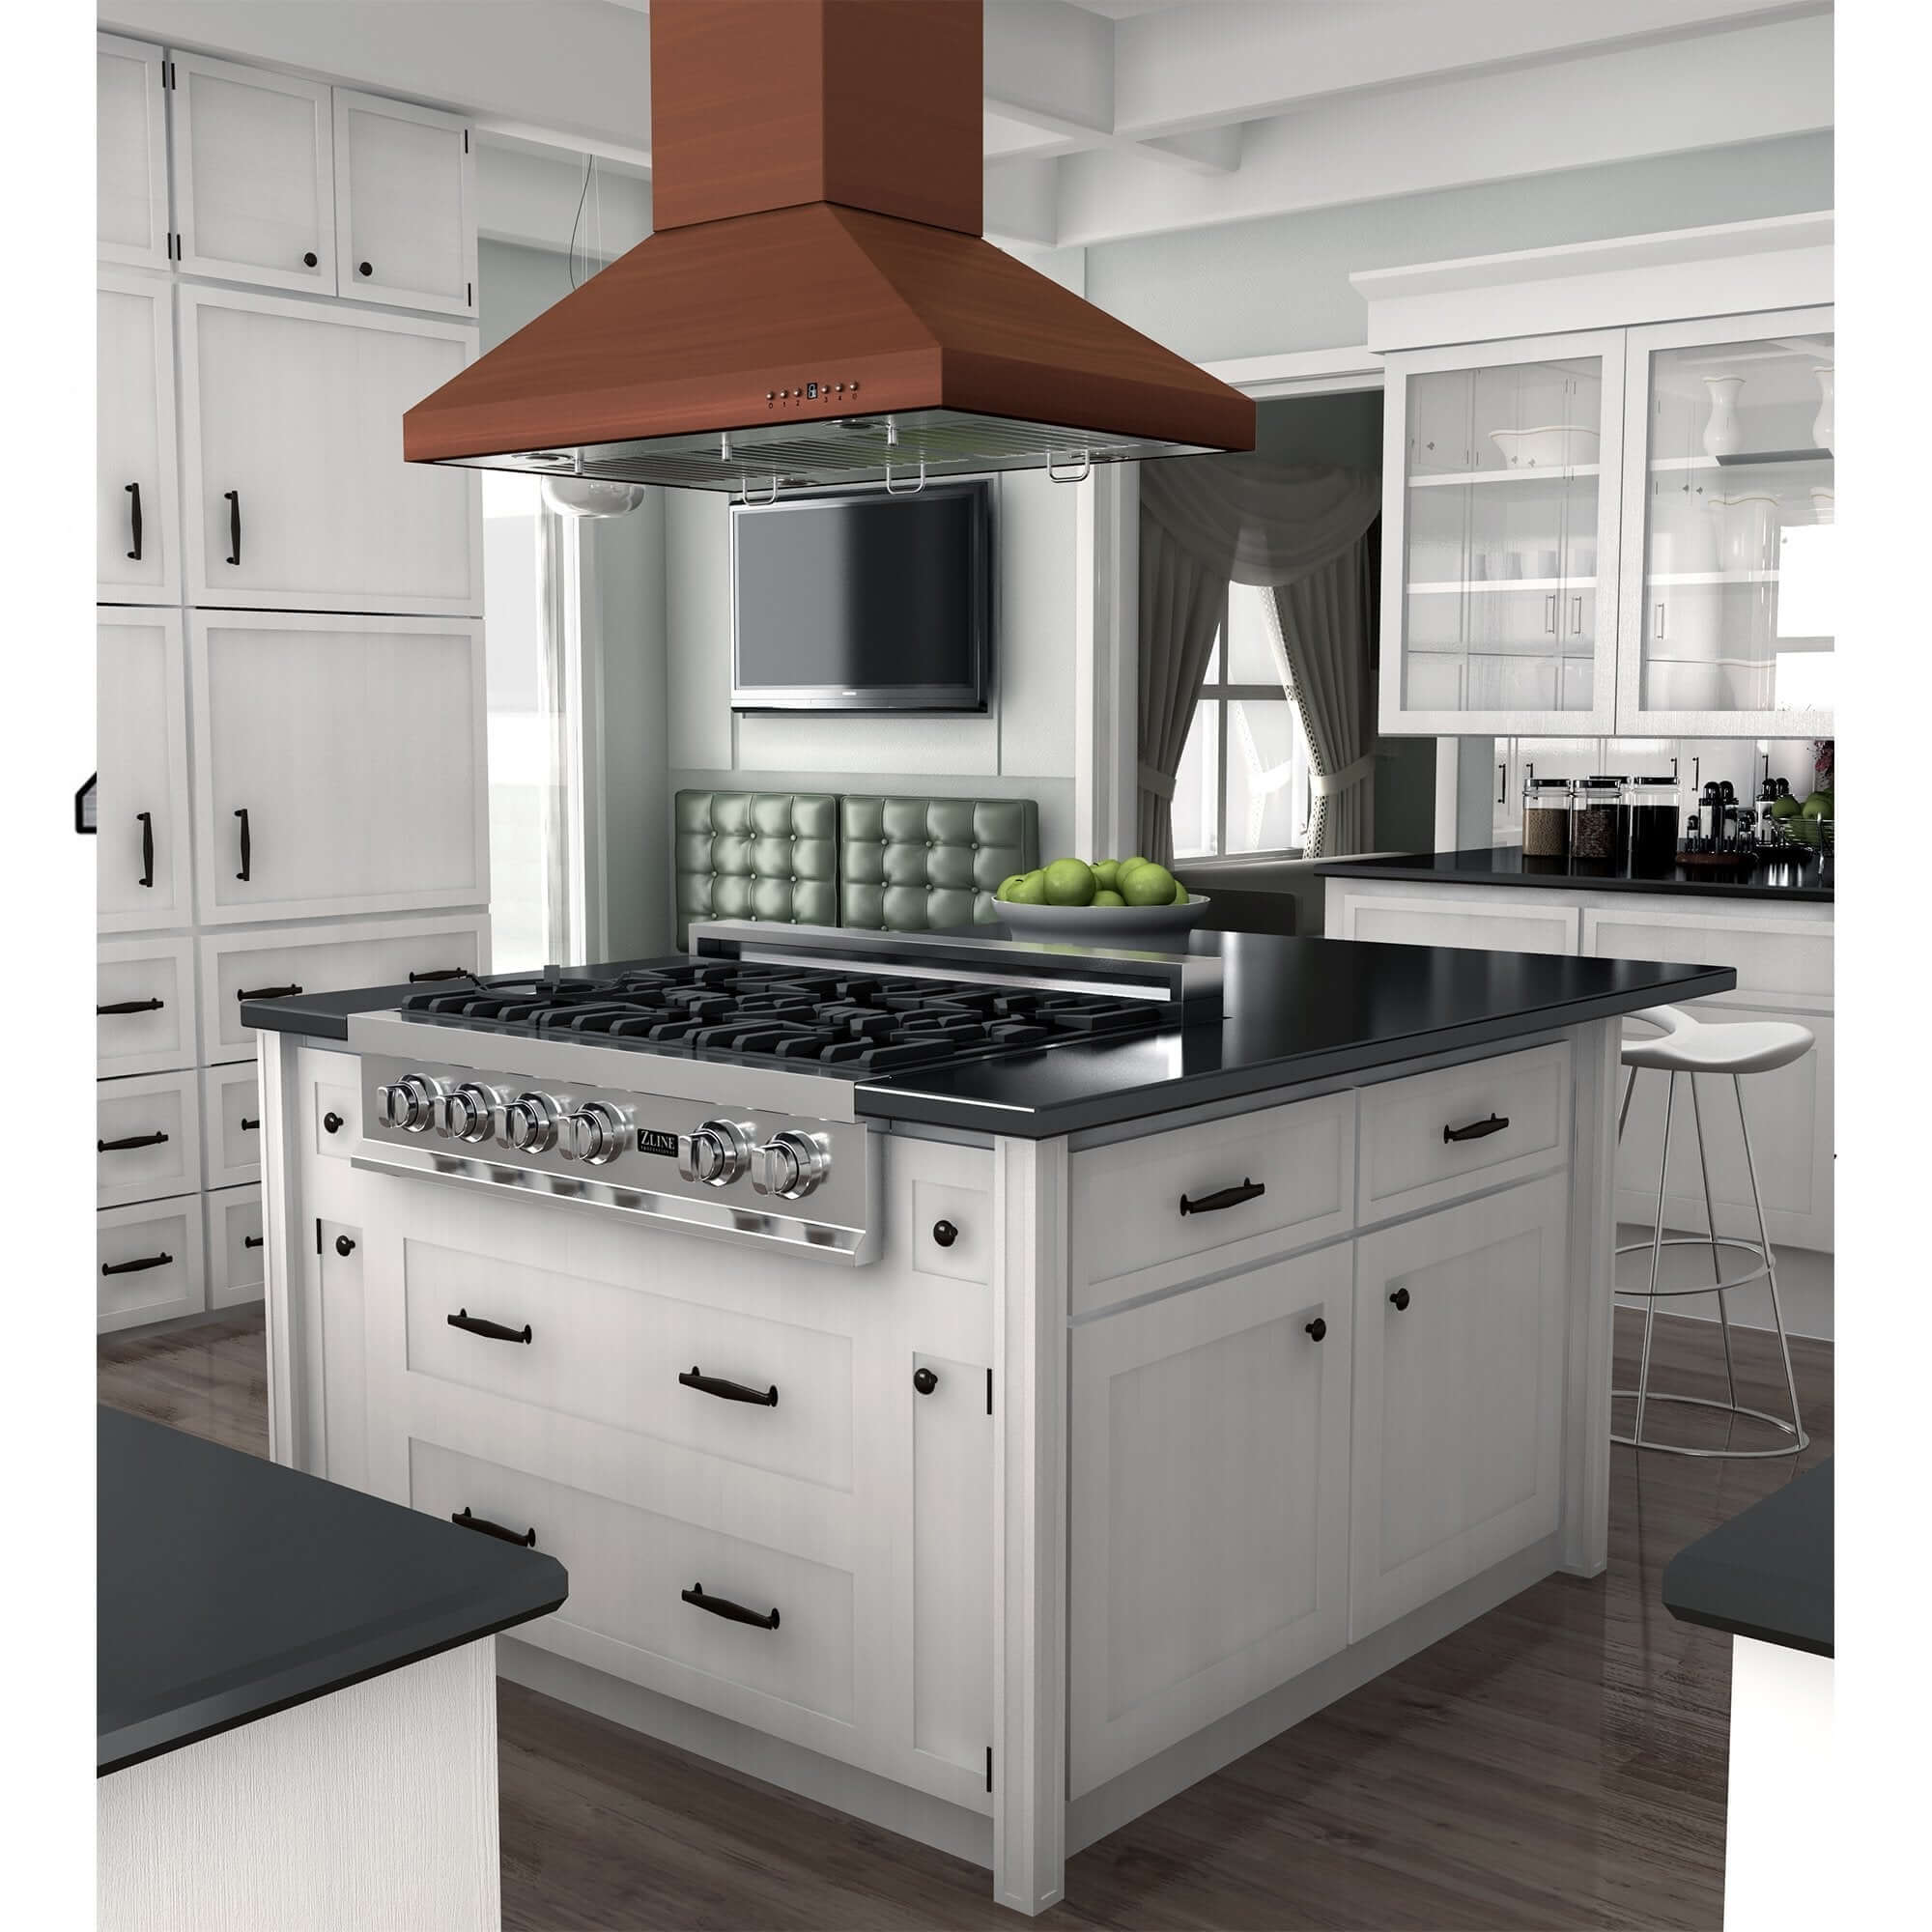 ZLINE 36 in. Designer Series Copper Island Mount Range Hood (8KL3iC-36) rendering in a modern kitchen.